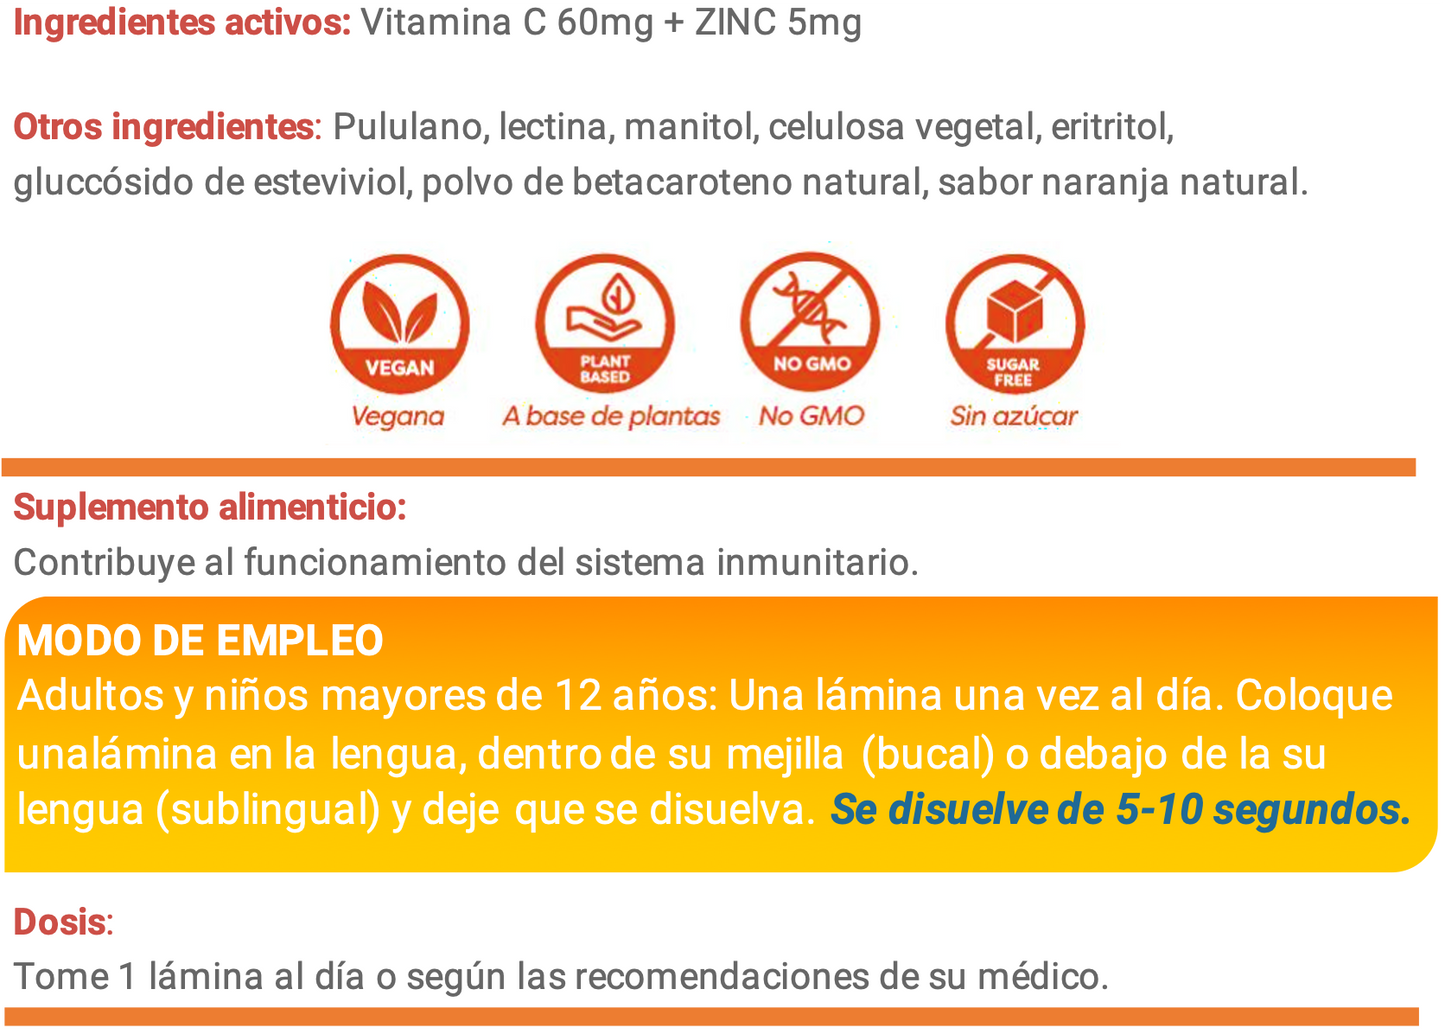 Vitamina C + Zinc